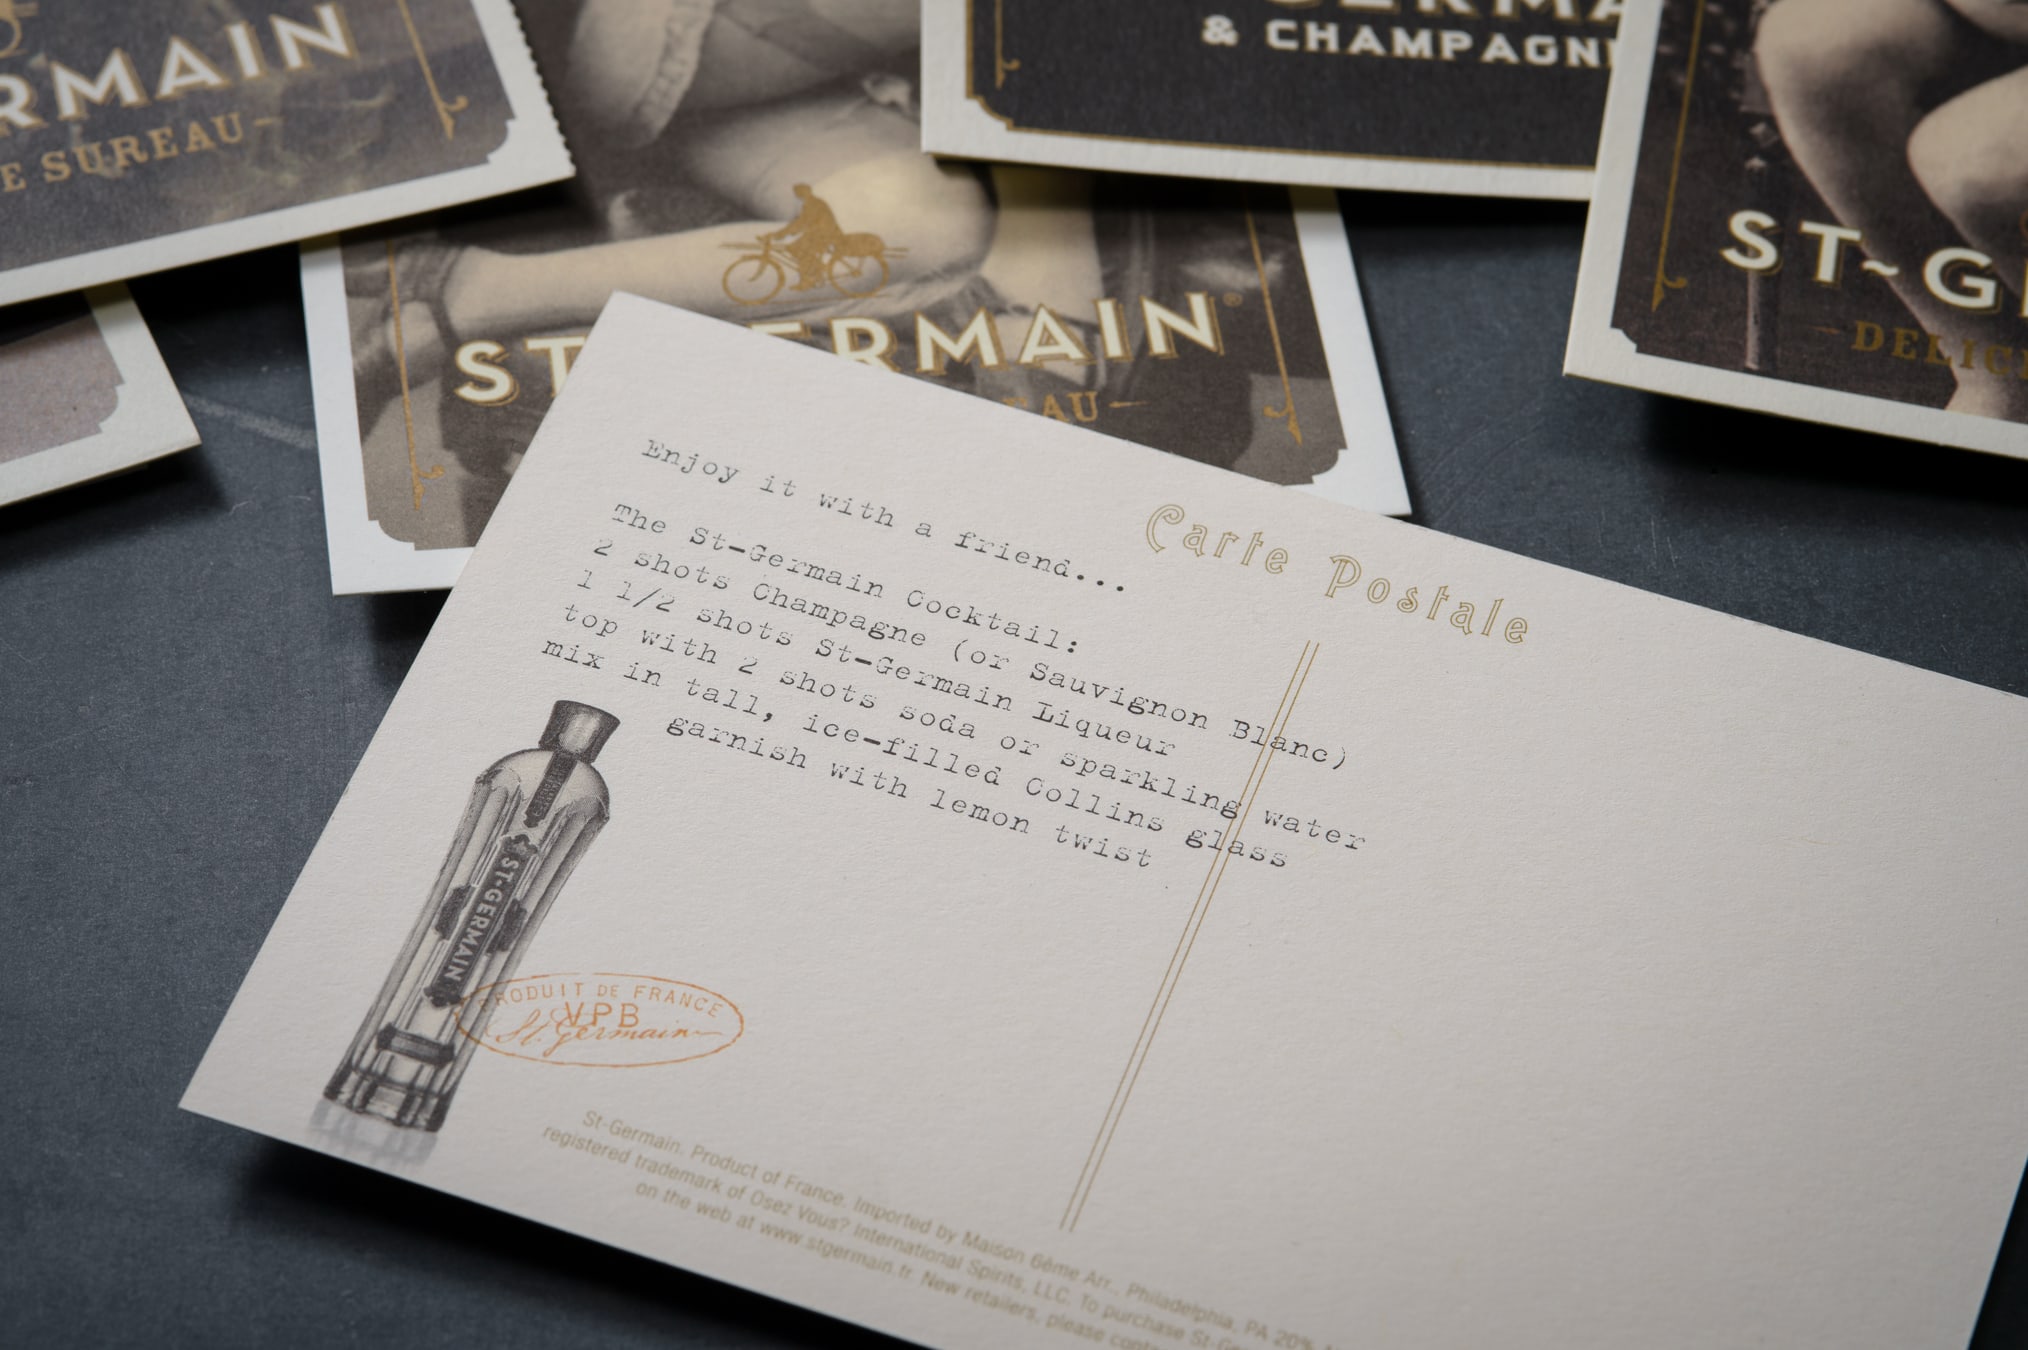 St-Germain spirits promotions recipe card design